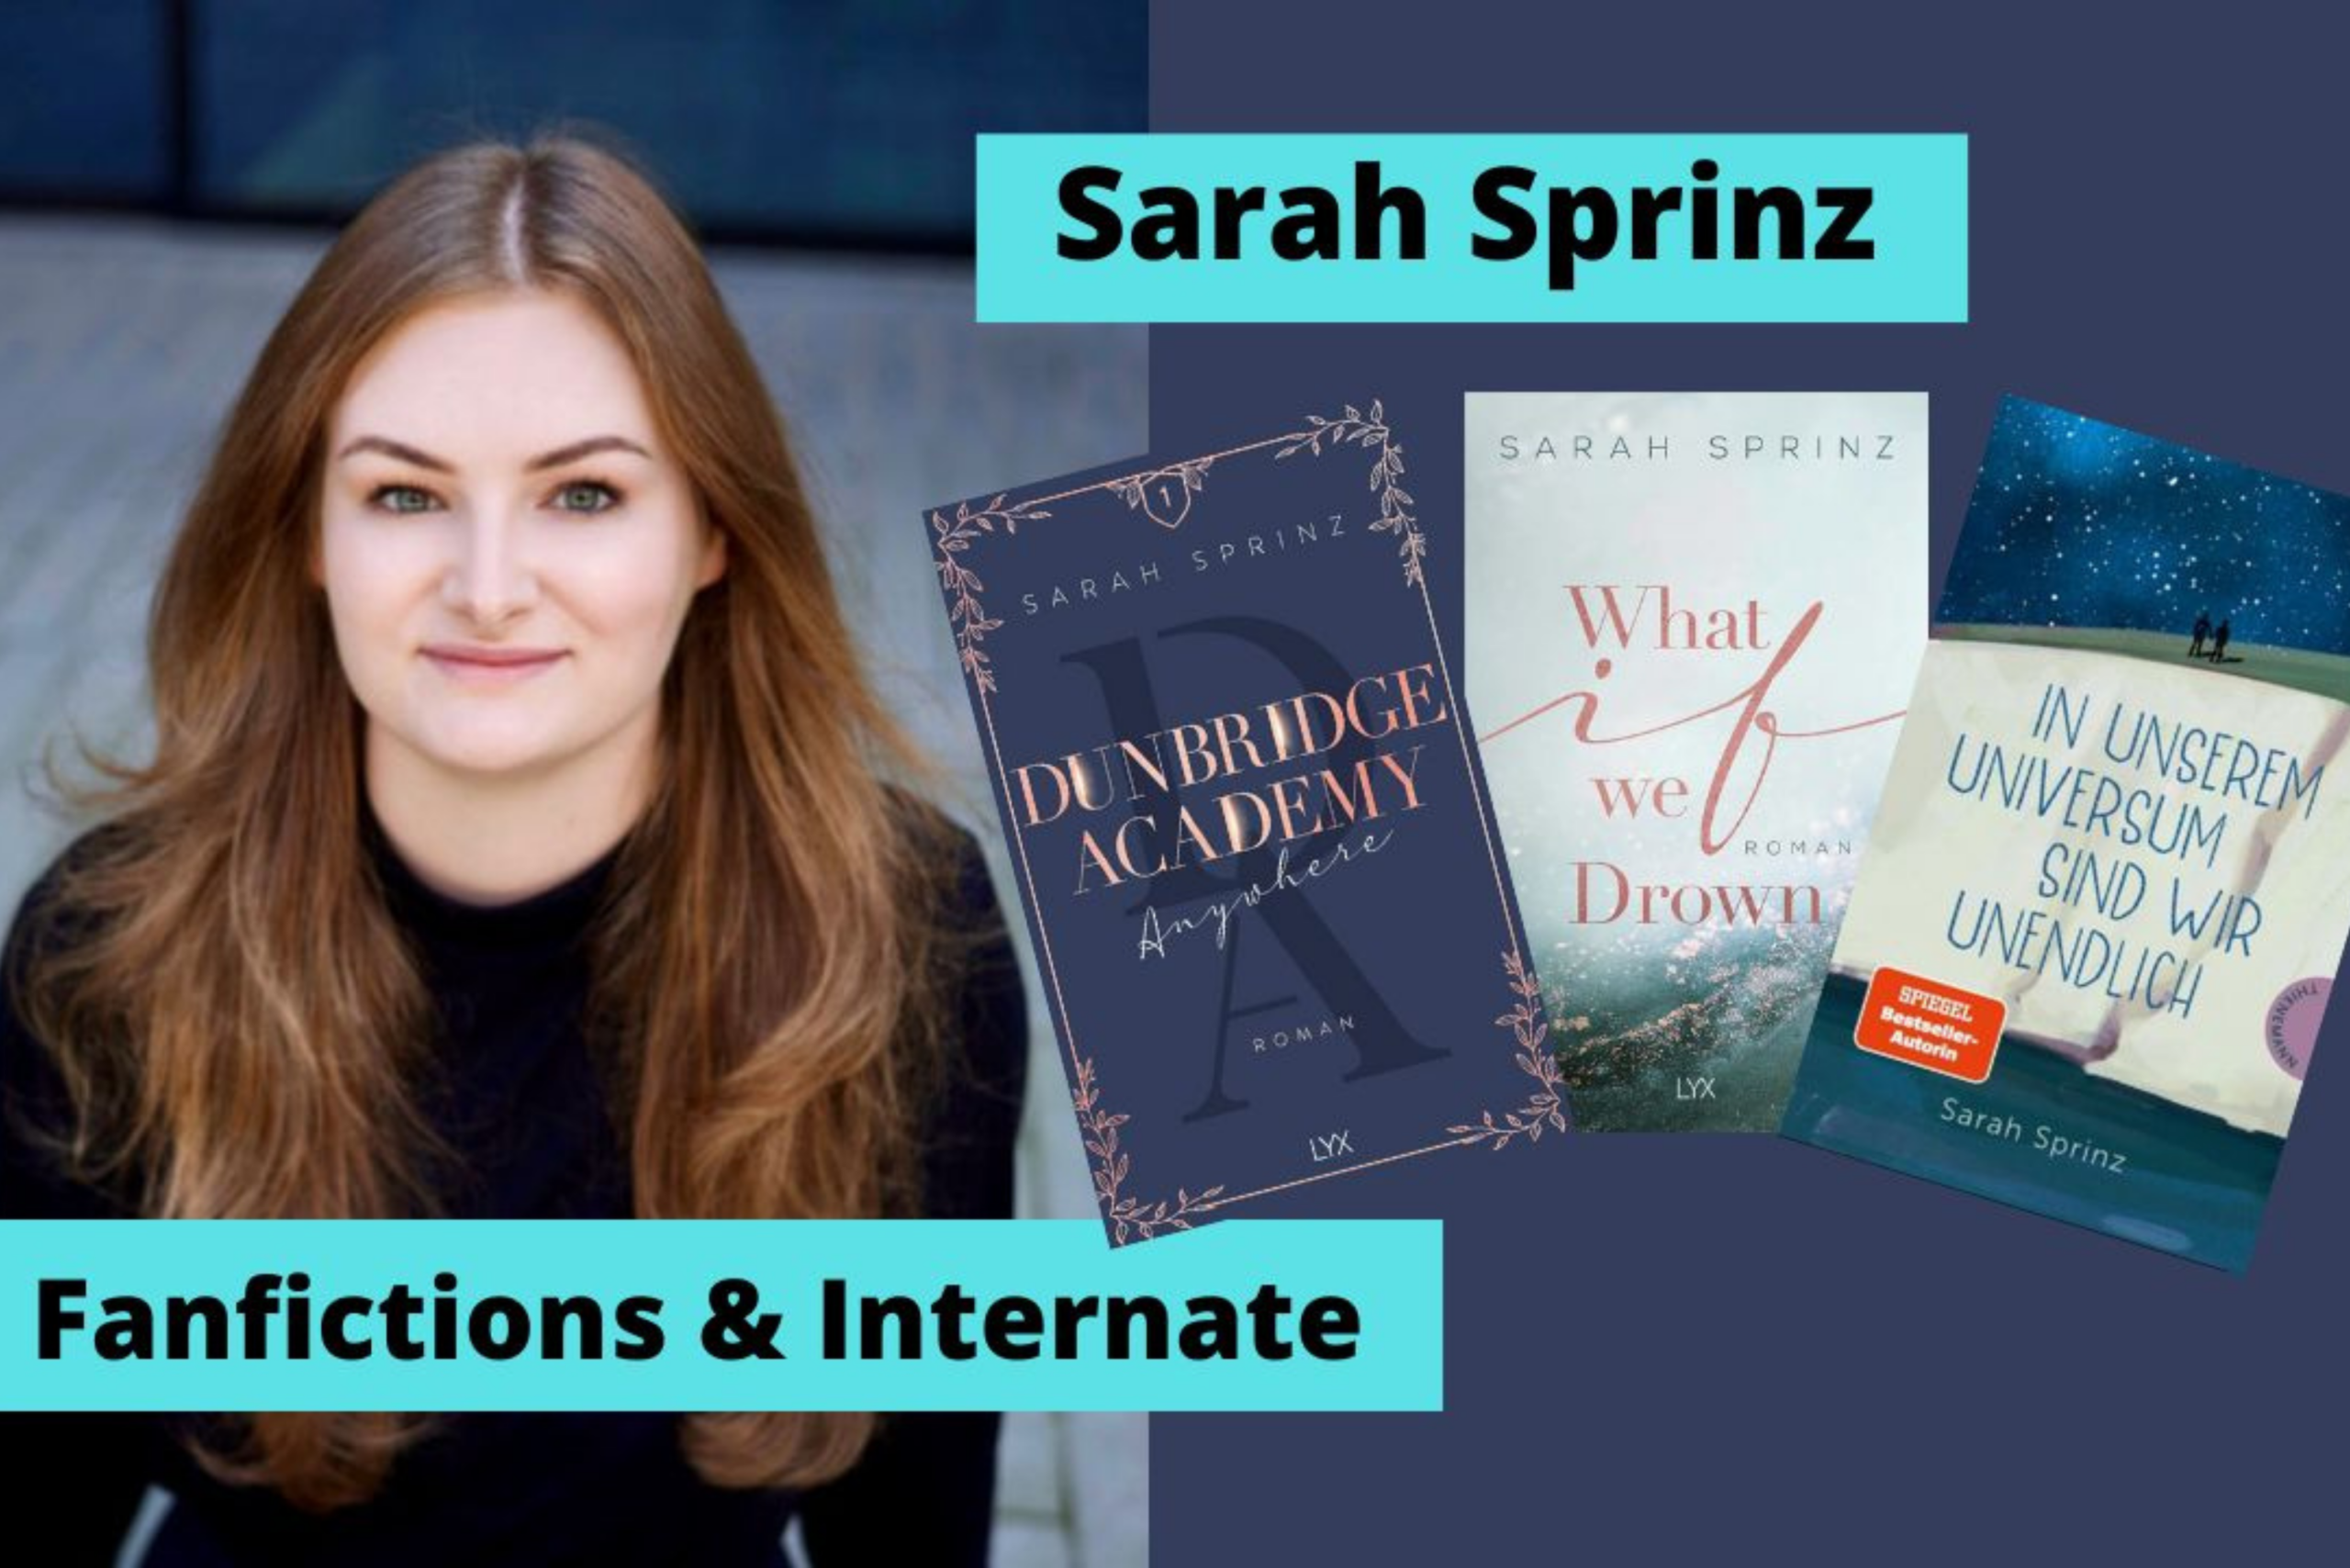 Interview Sarah Sprinz - Dunbridge Academy - What if we drown